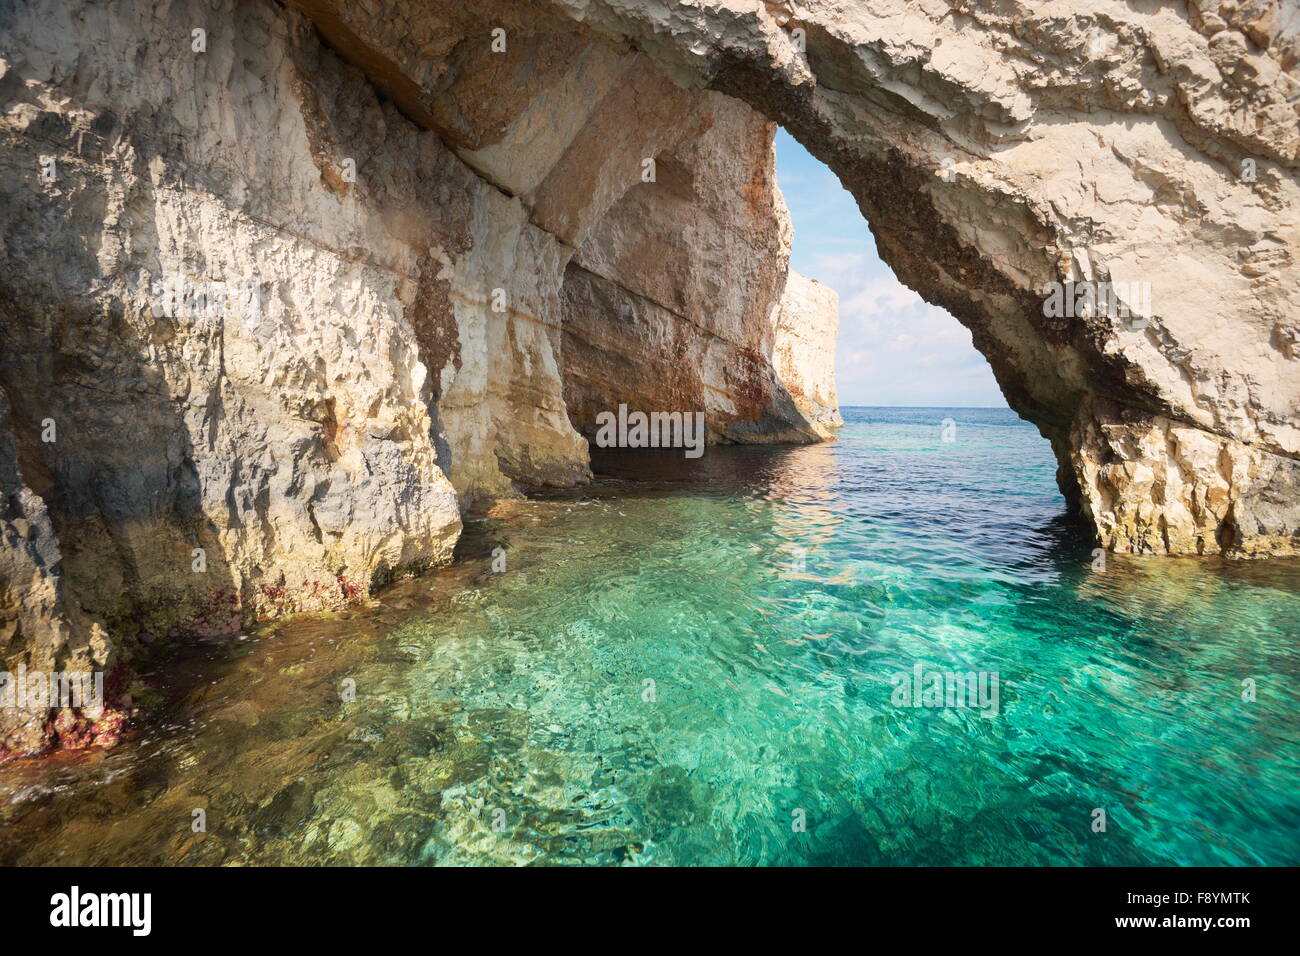 Greece - Zakynthos Island, Ionian Sea, Blue Caves Stock Photo